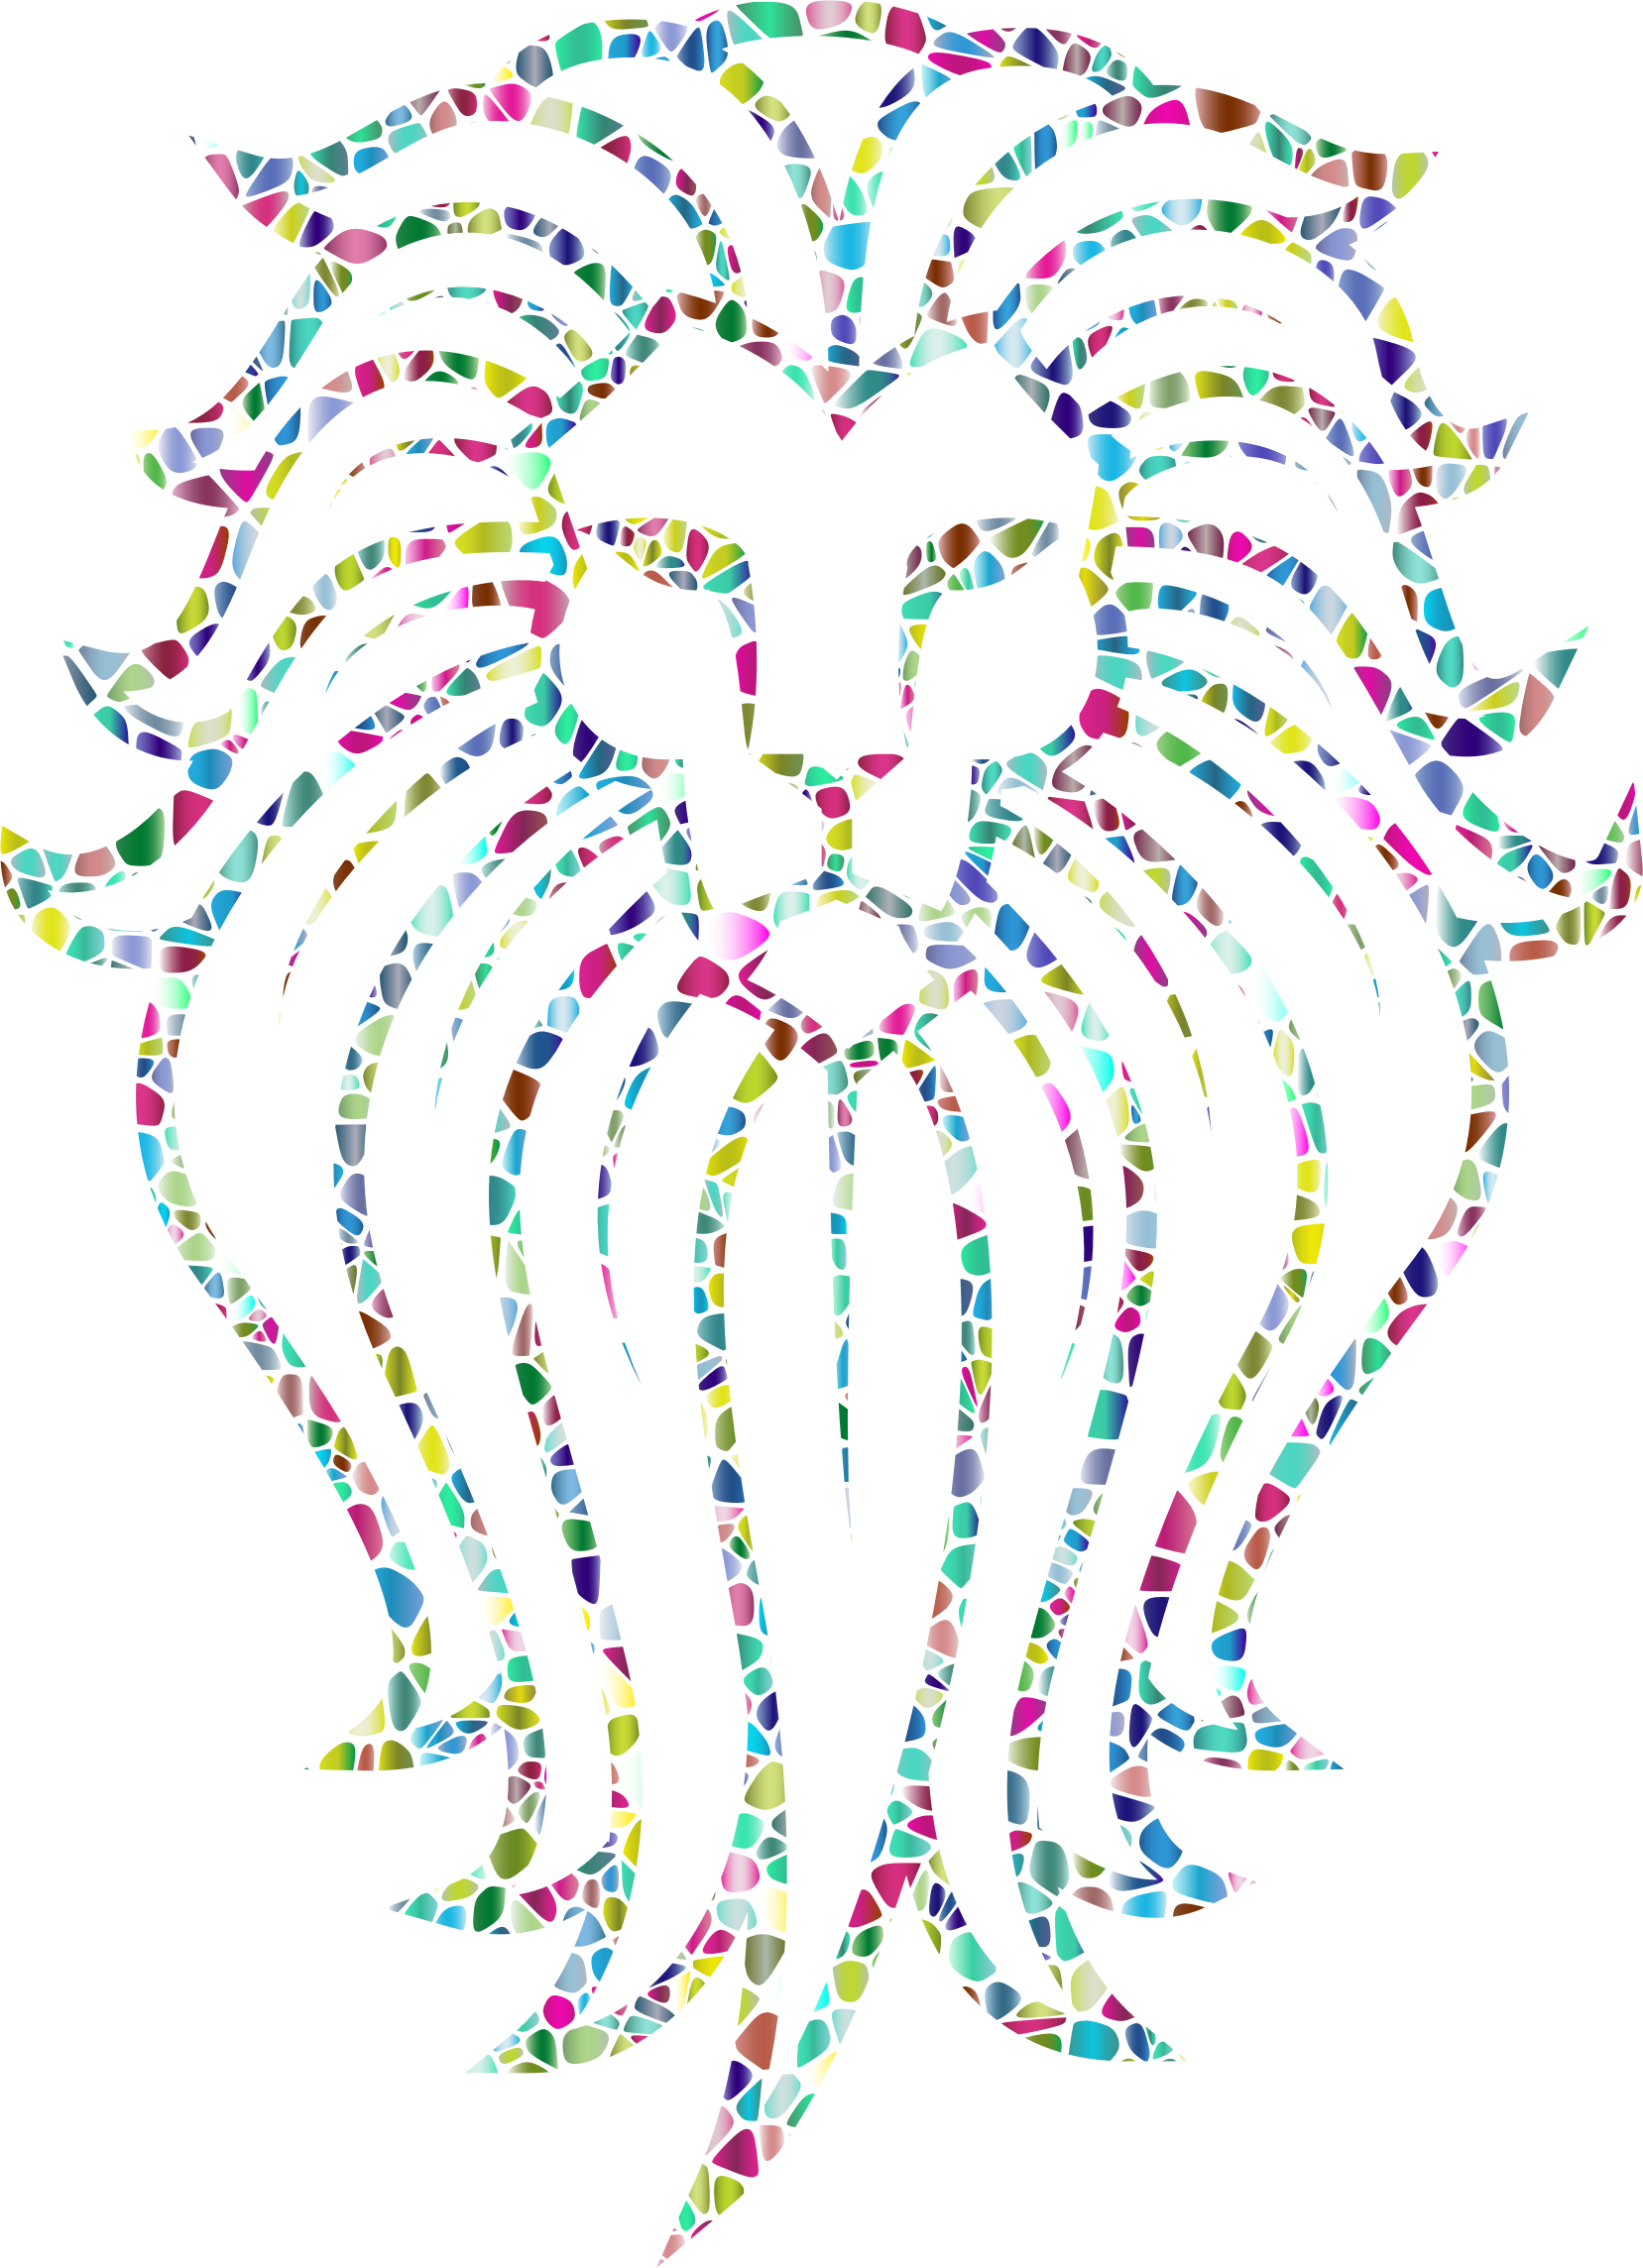 A Colorful Mosaic Of A Lion